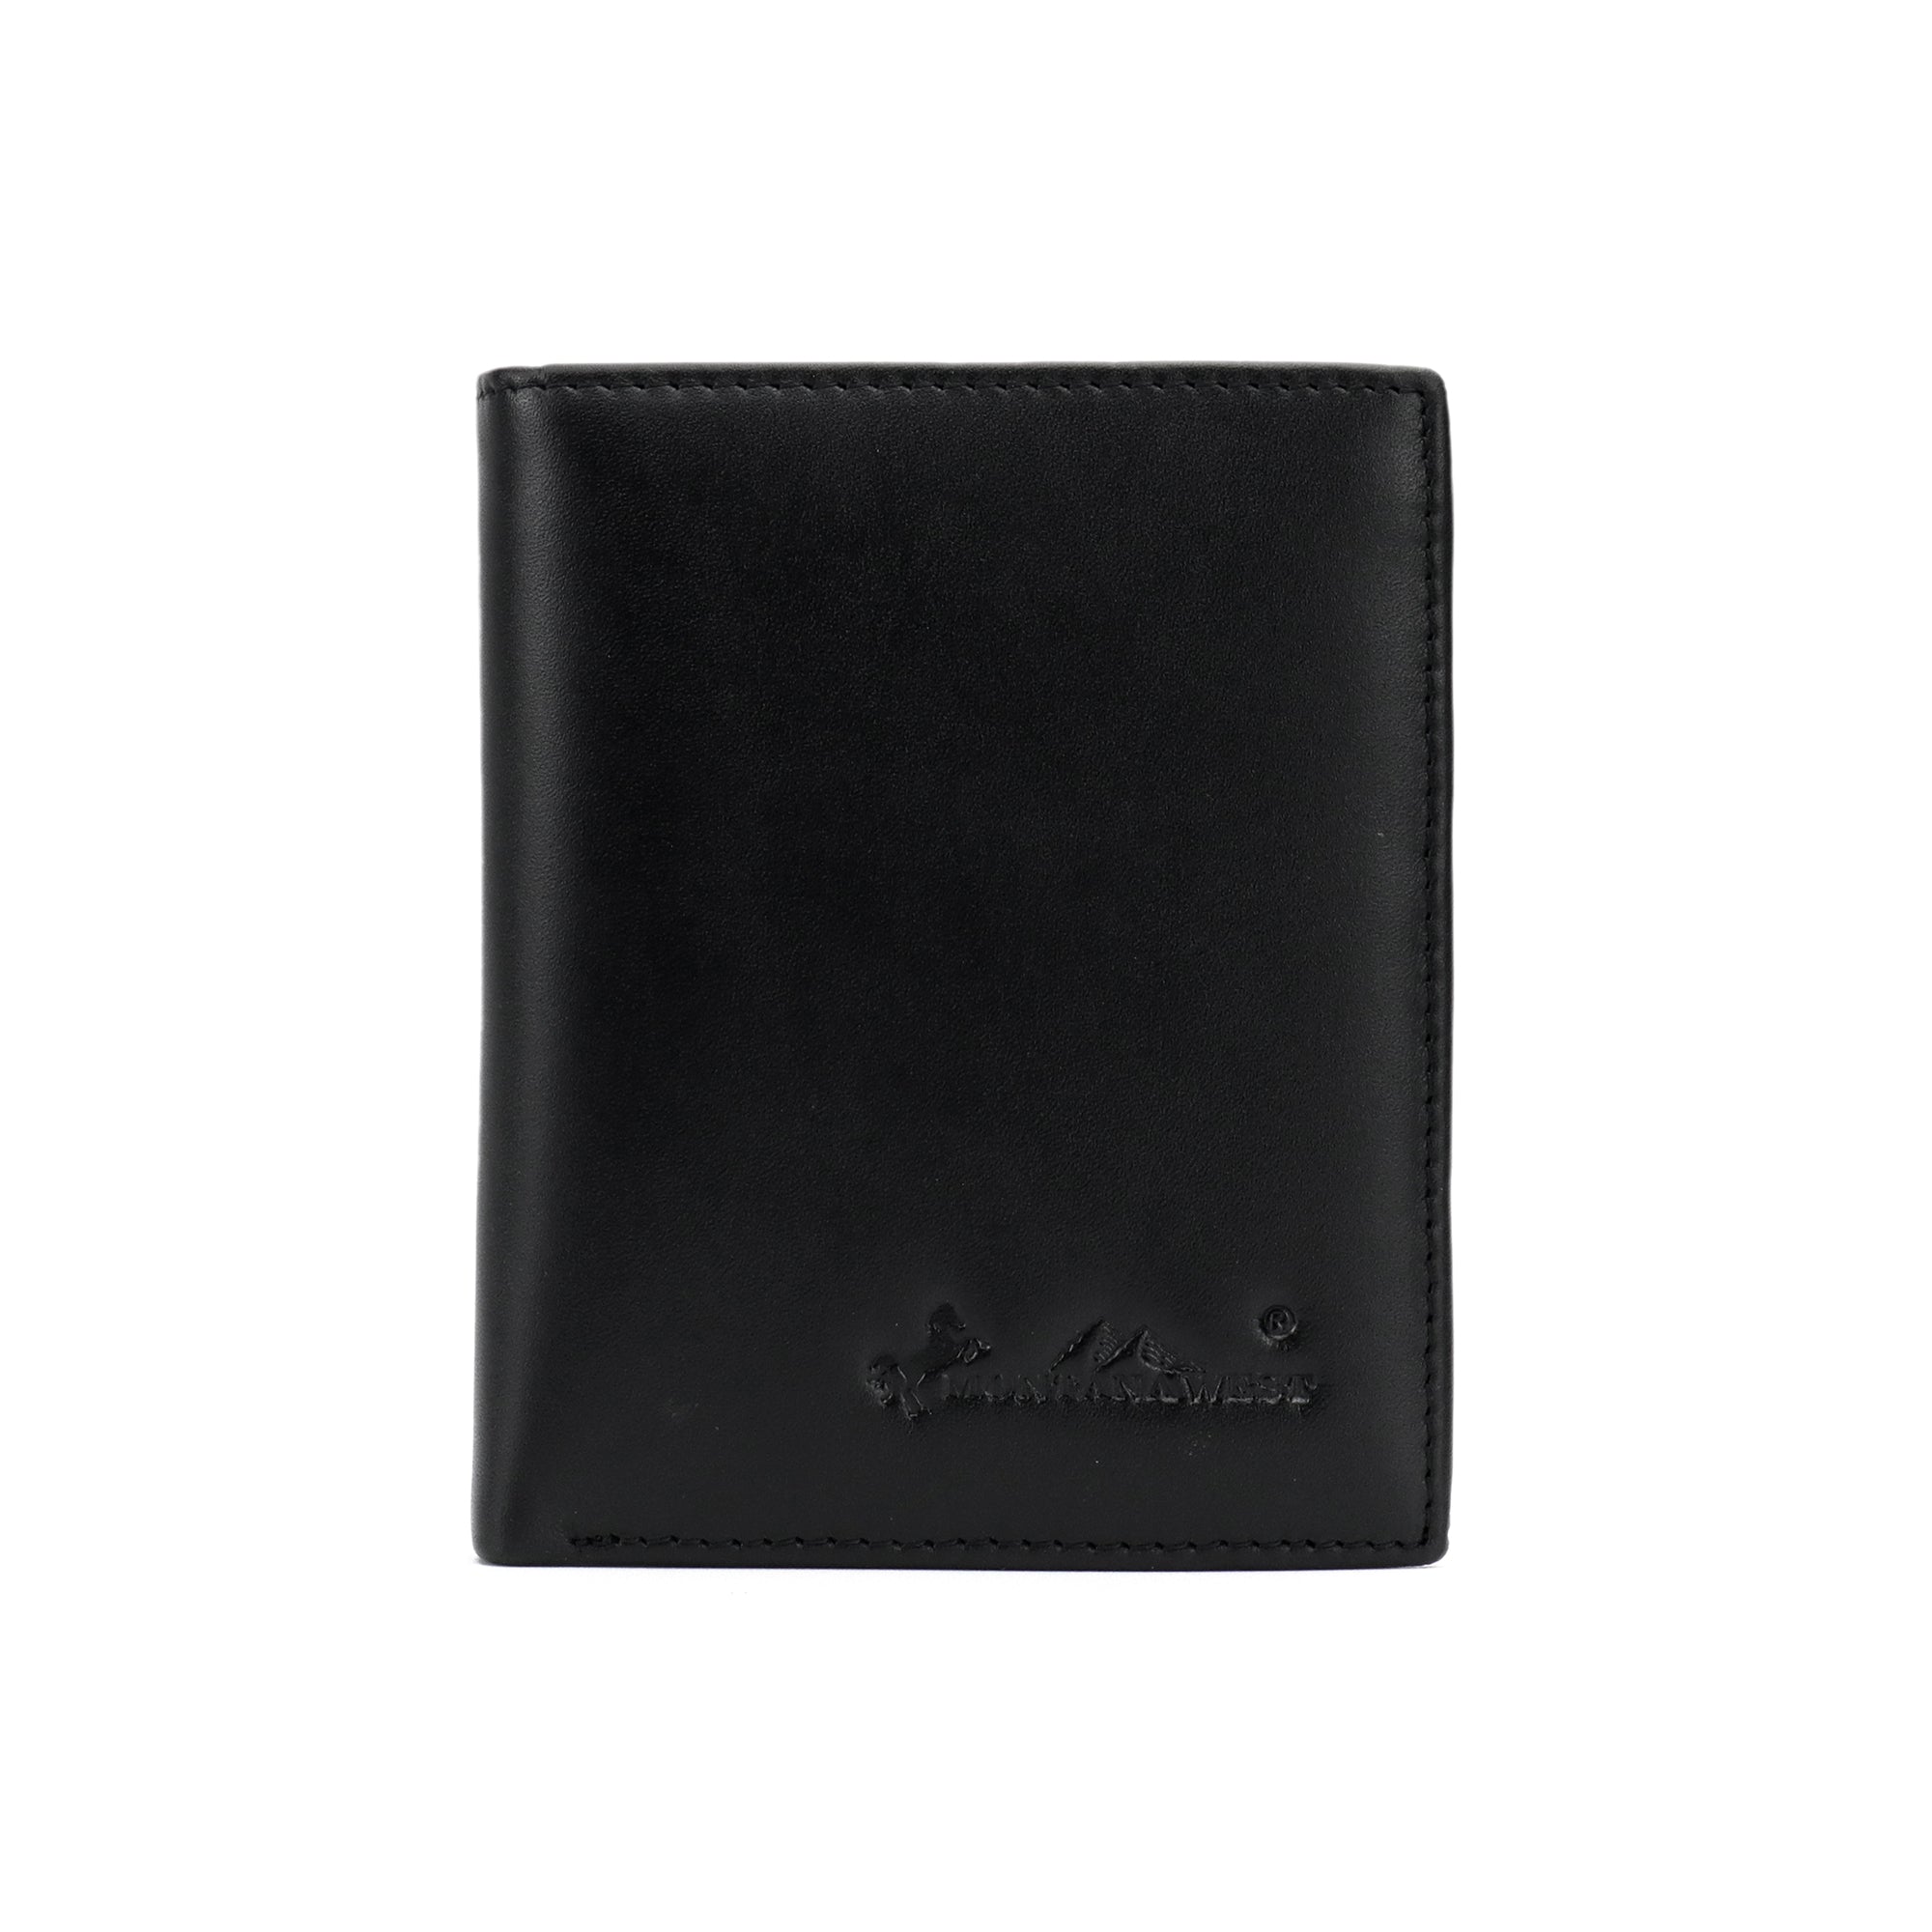  Mens Wallet, RFID Blocking Made of Genuine Leather